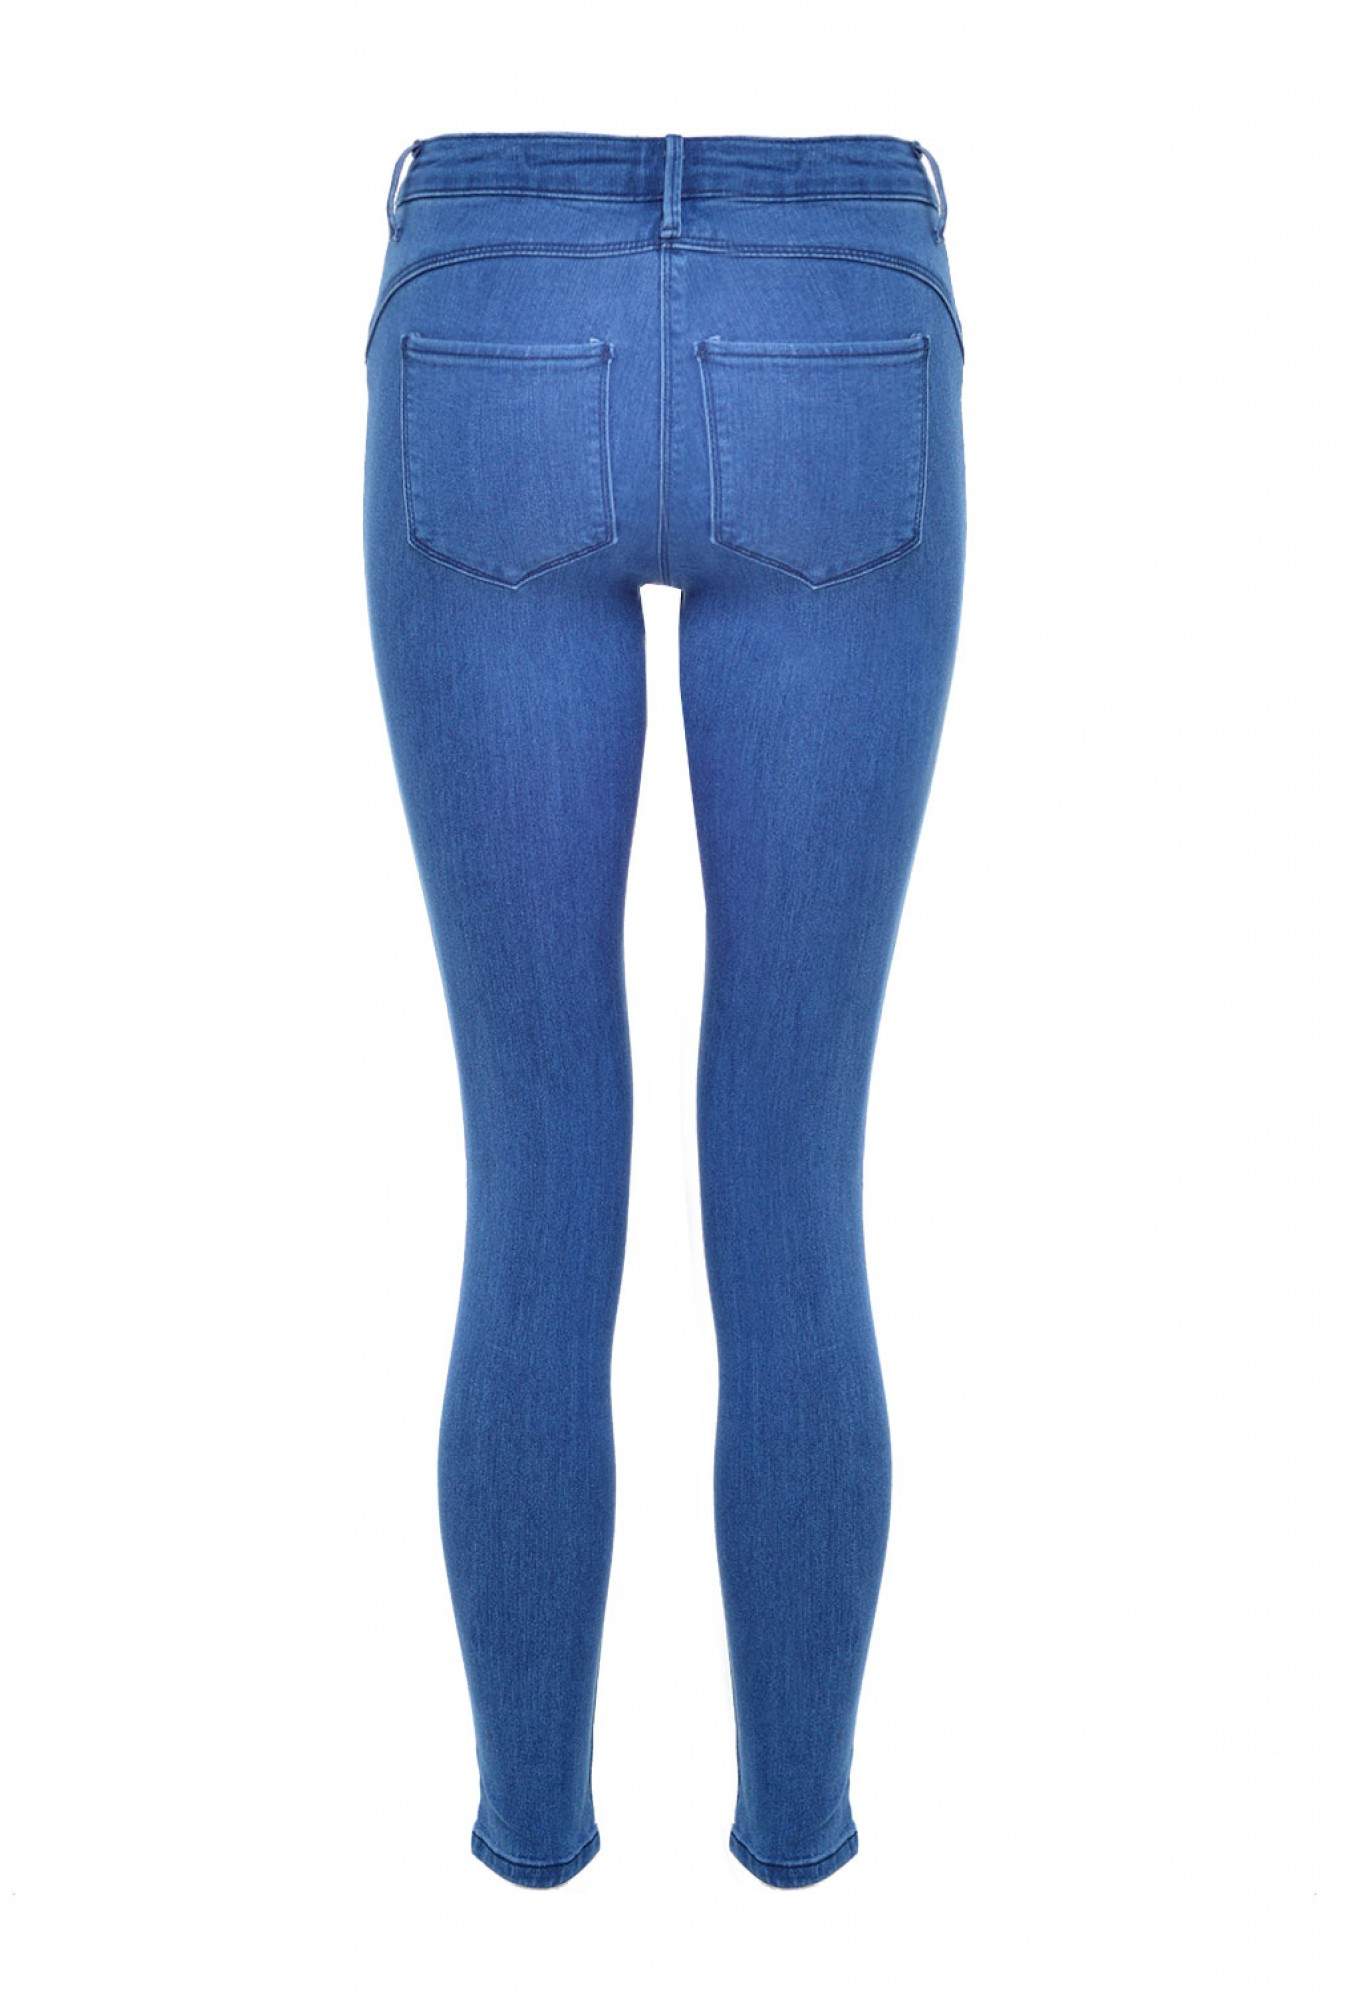 Only Rain Regular Push Up Jeans in Medium Blue | iCLOTHING